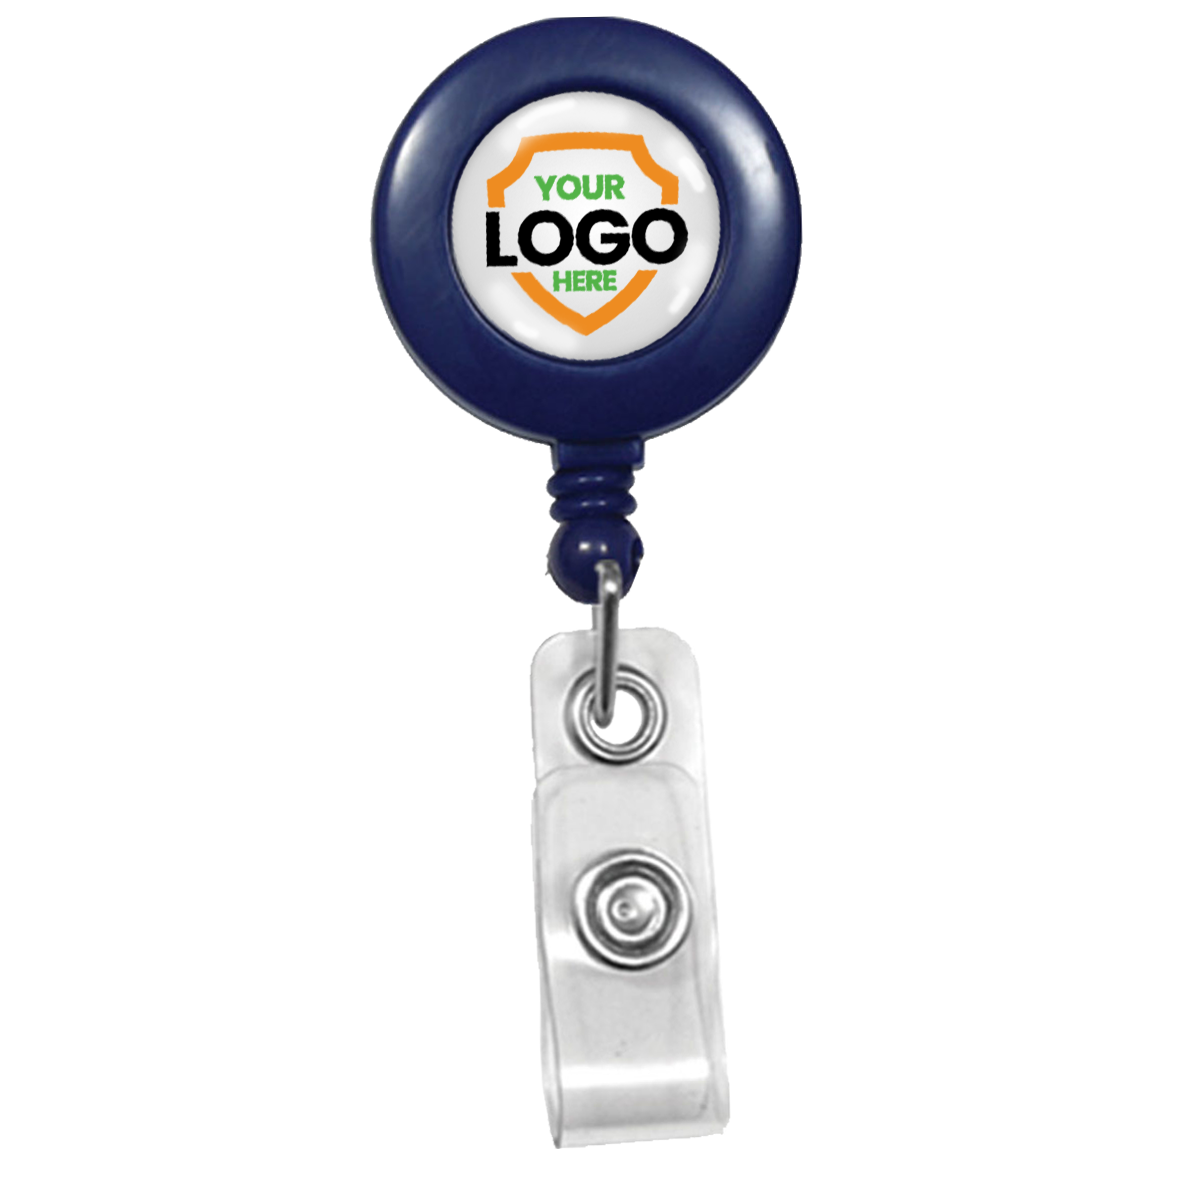 customizable badge reels - standard retractable custom badge reels for business branding 2120-3032 Blue